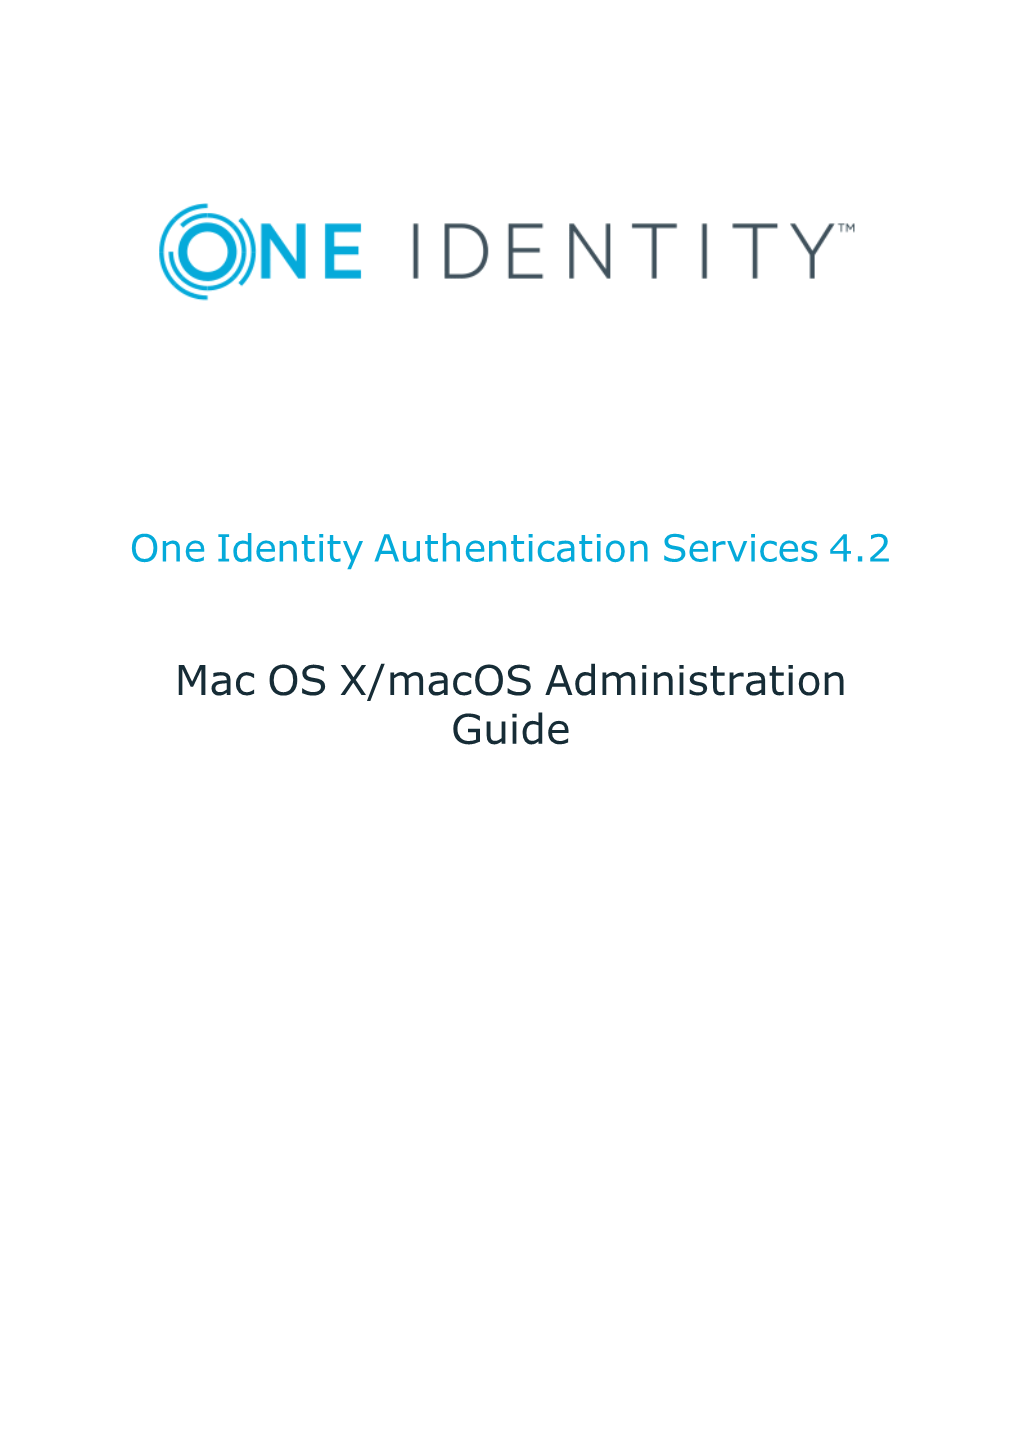 Mac OS X/Macos Administration Guide Copyright 2019 One Identity LLC